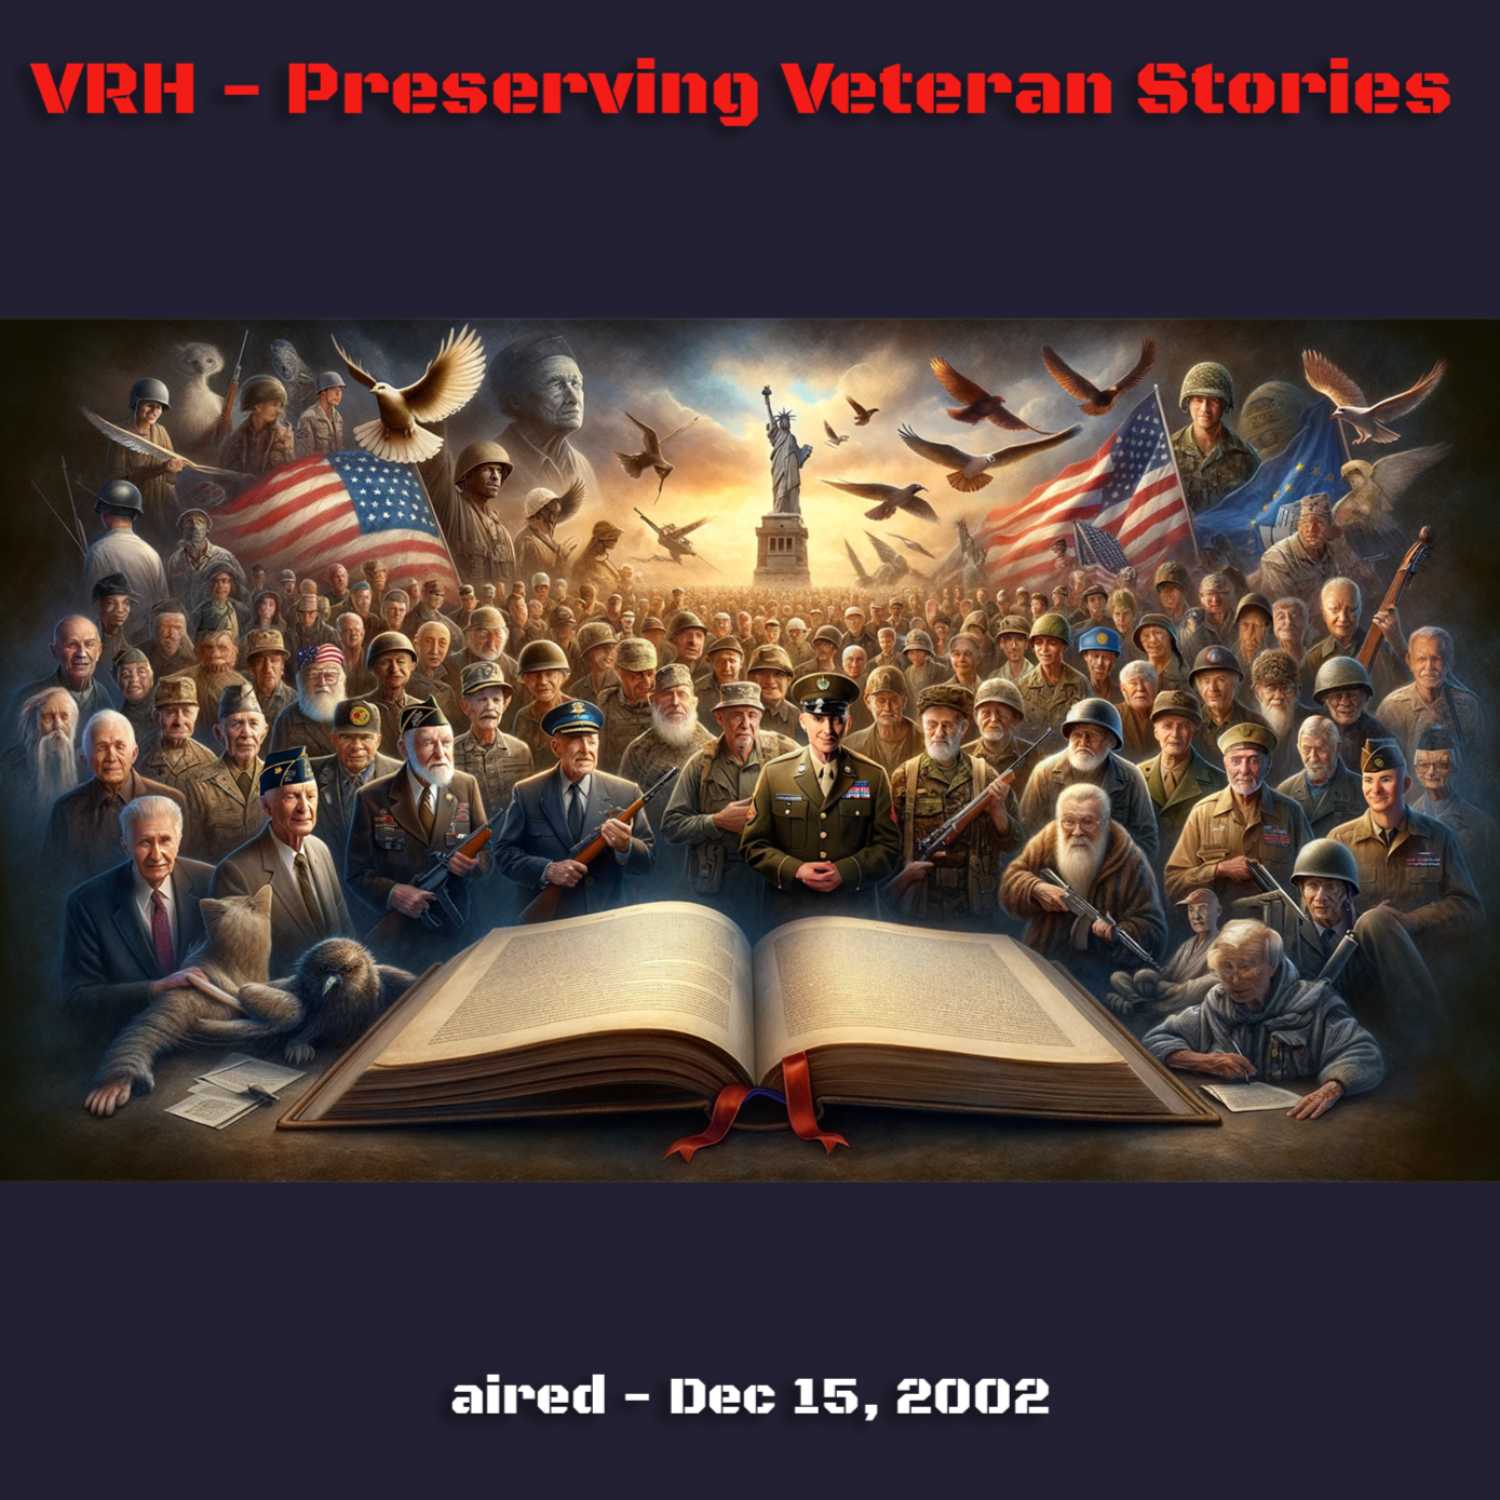 VRH - Preserving Veteran Stories - aired Dec 15, 2002